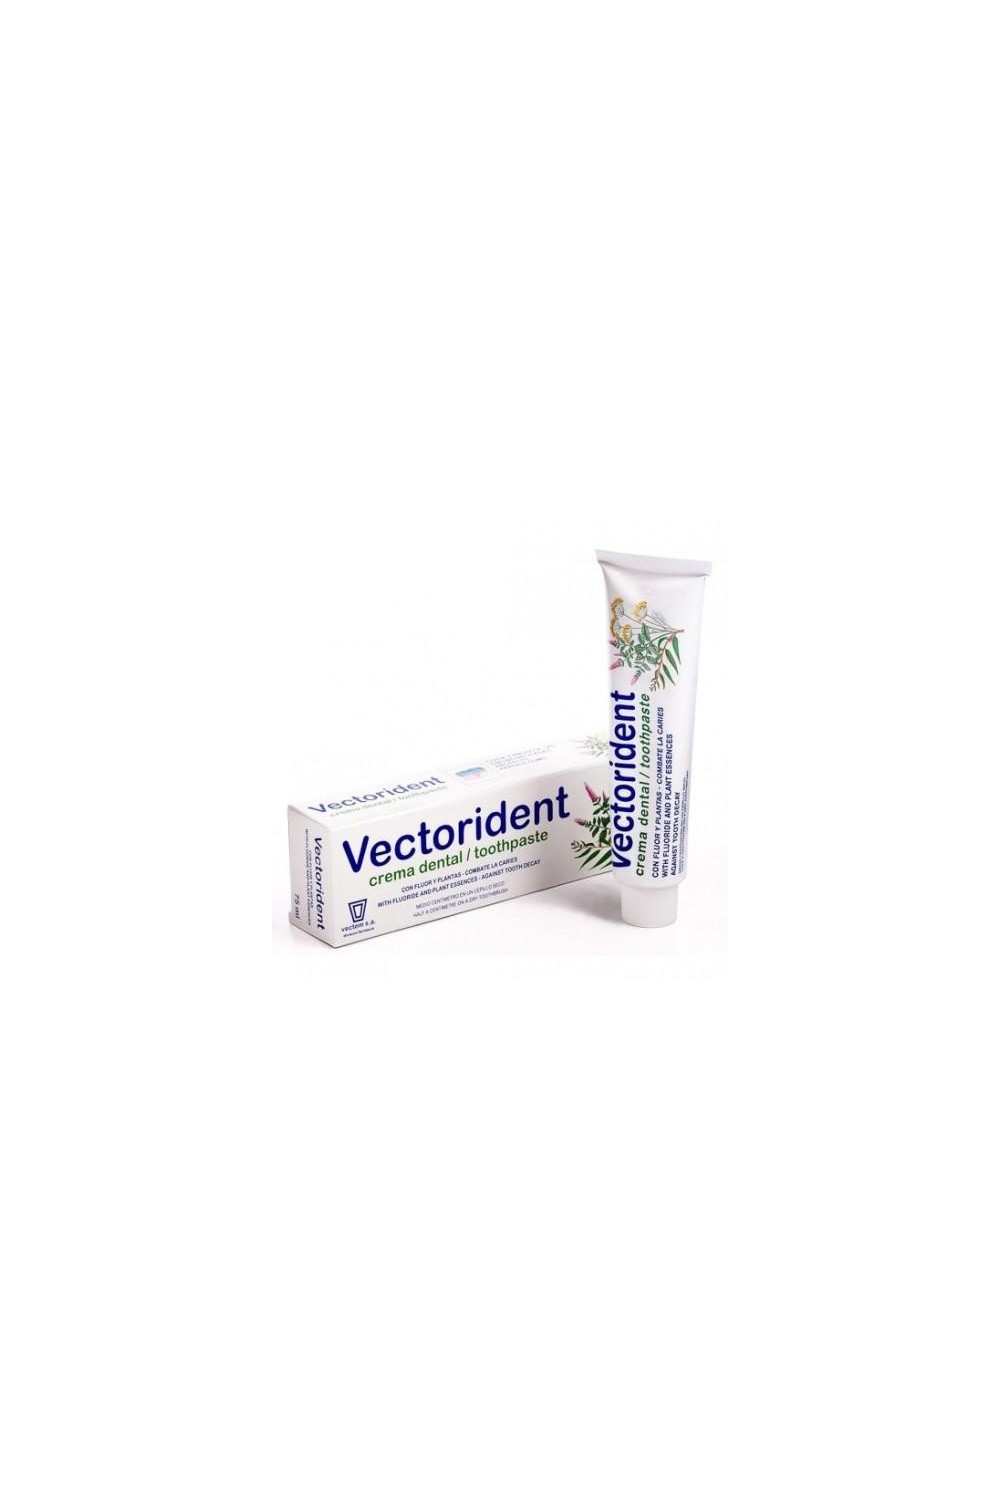 Vectem Vectorident Toothpaste 75ml